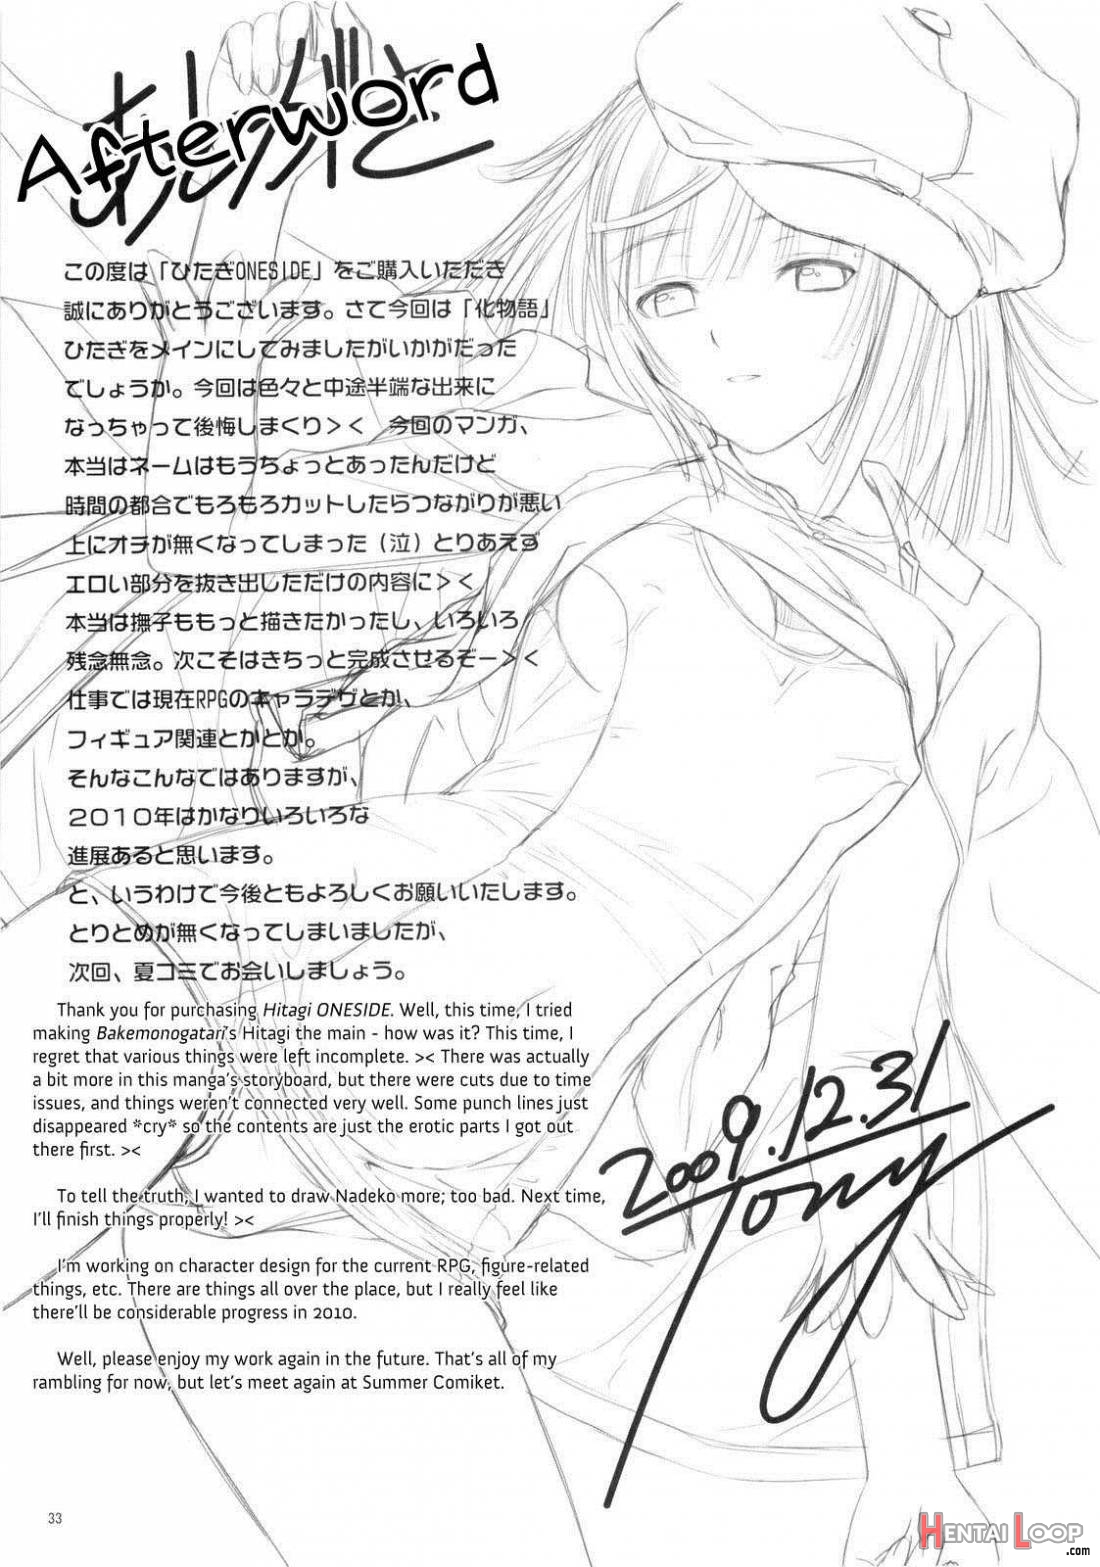 Hitagi One Side page 31